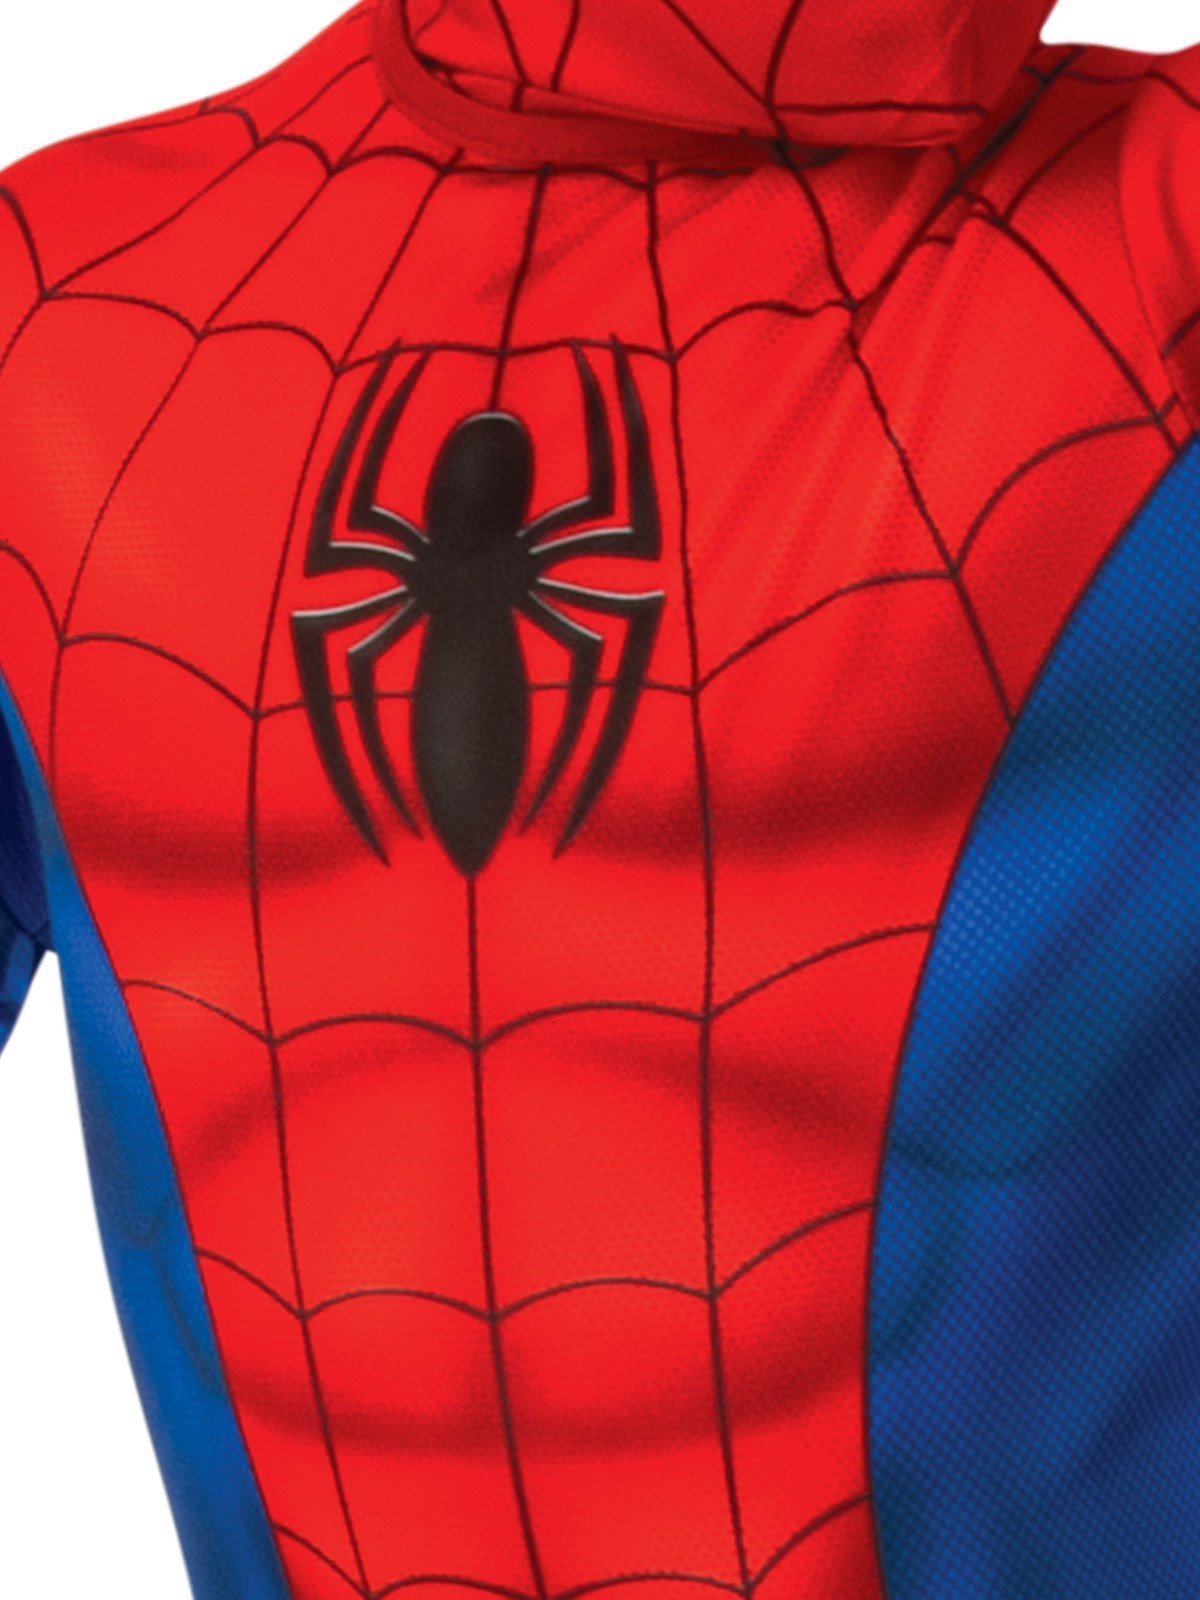 Spider-Man No Way Home Iron-Spider Classic Costume - Child